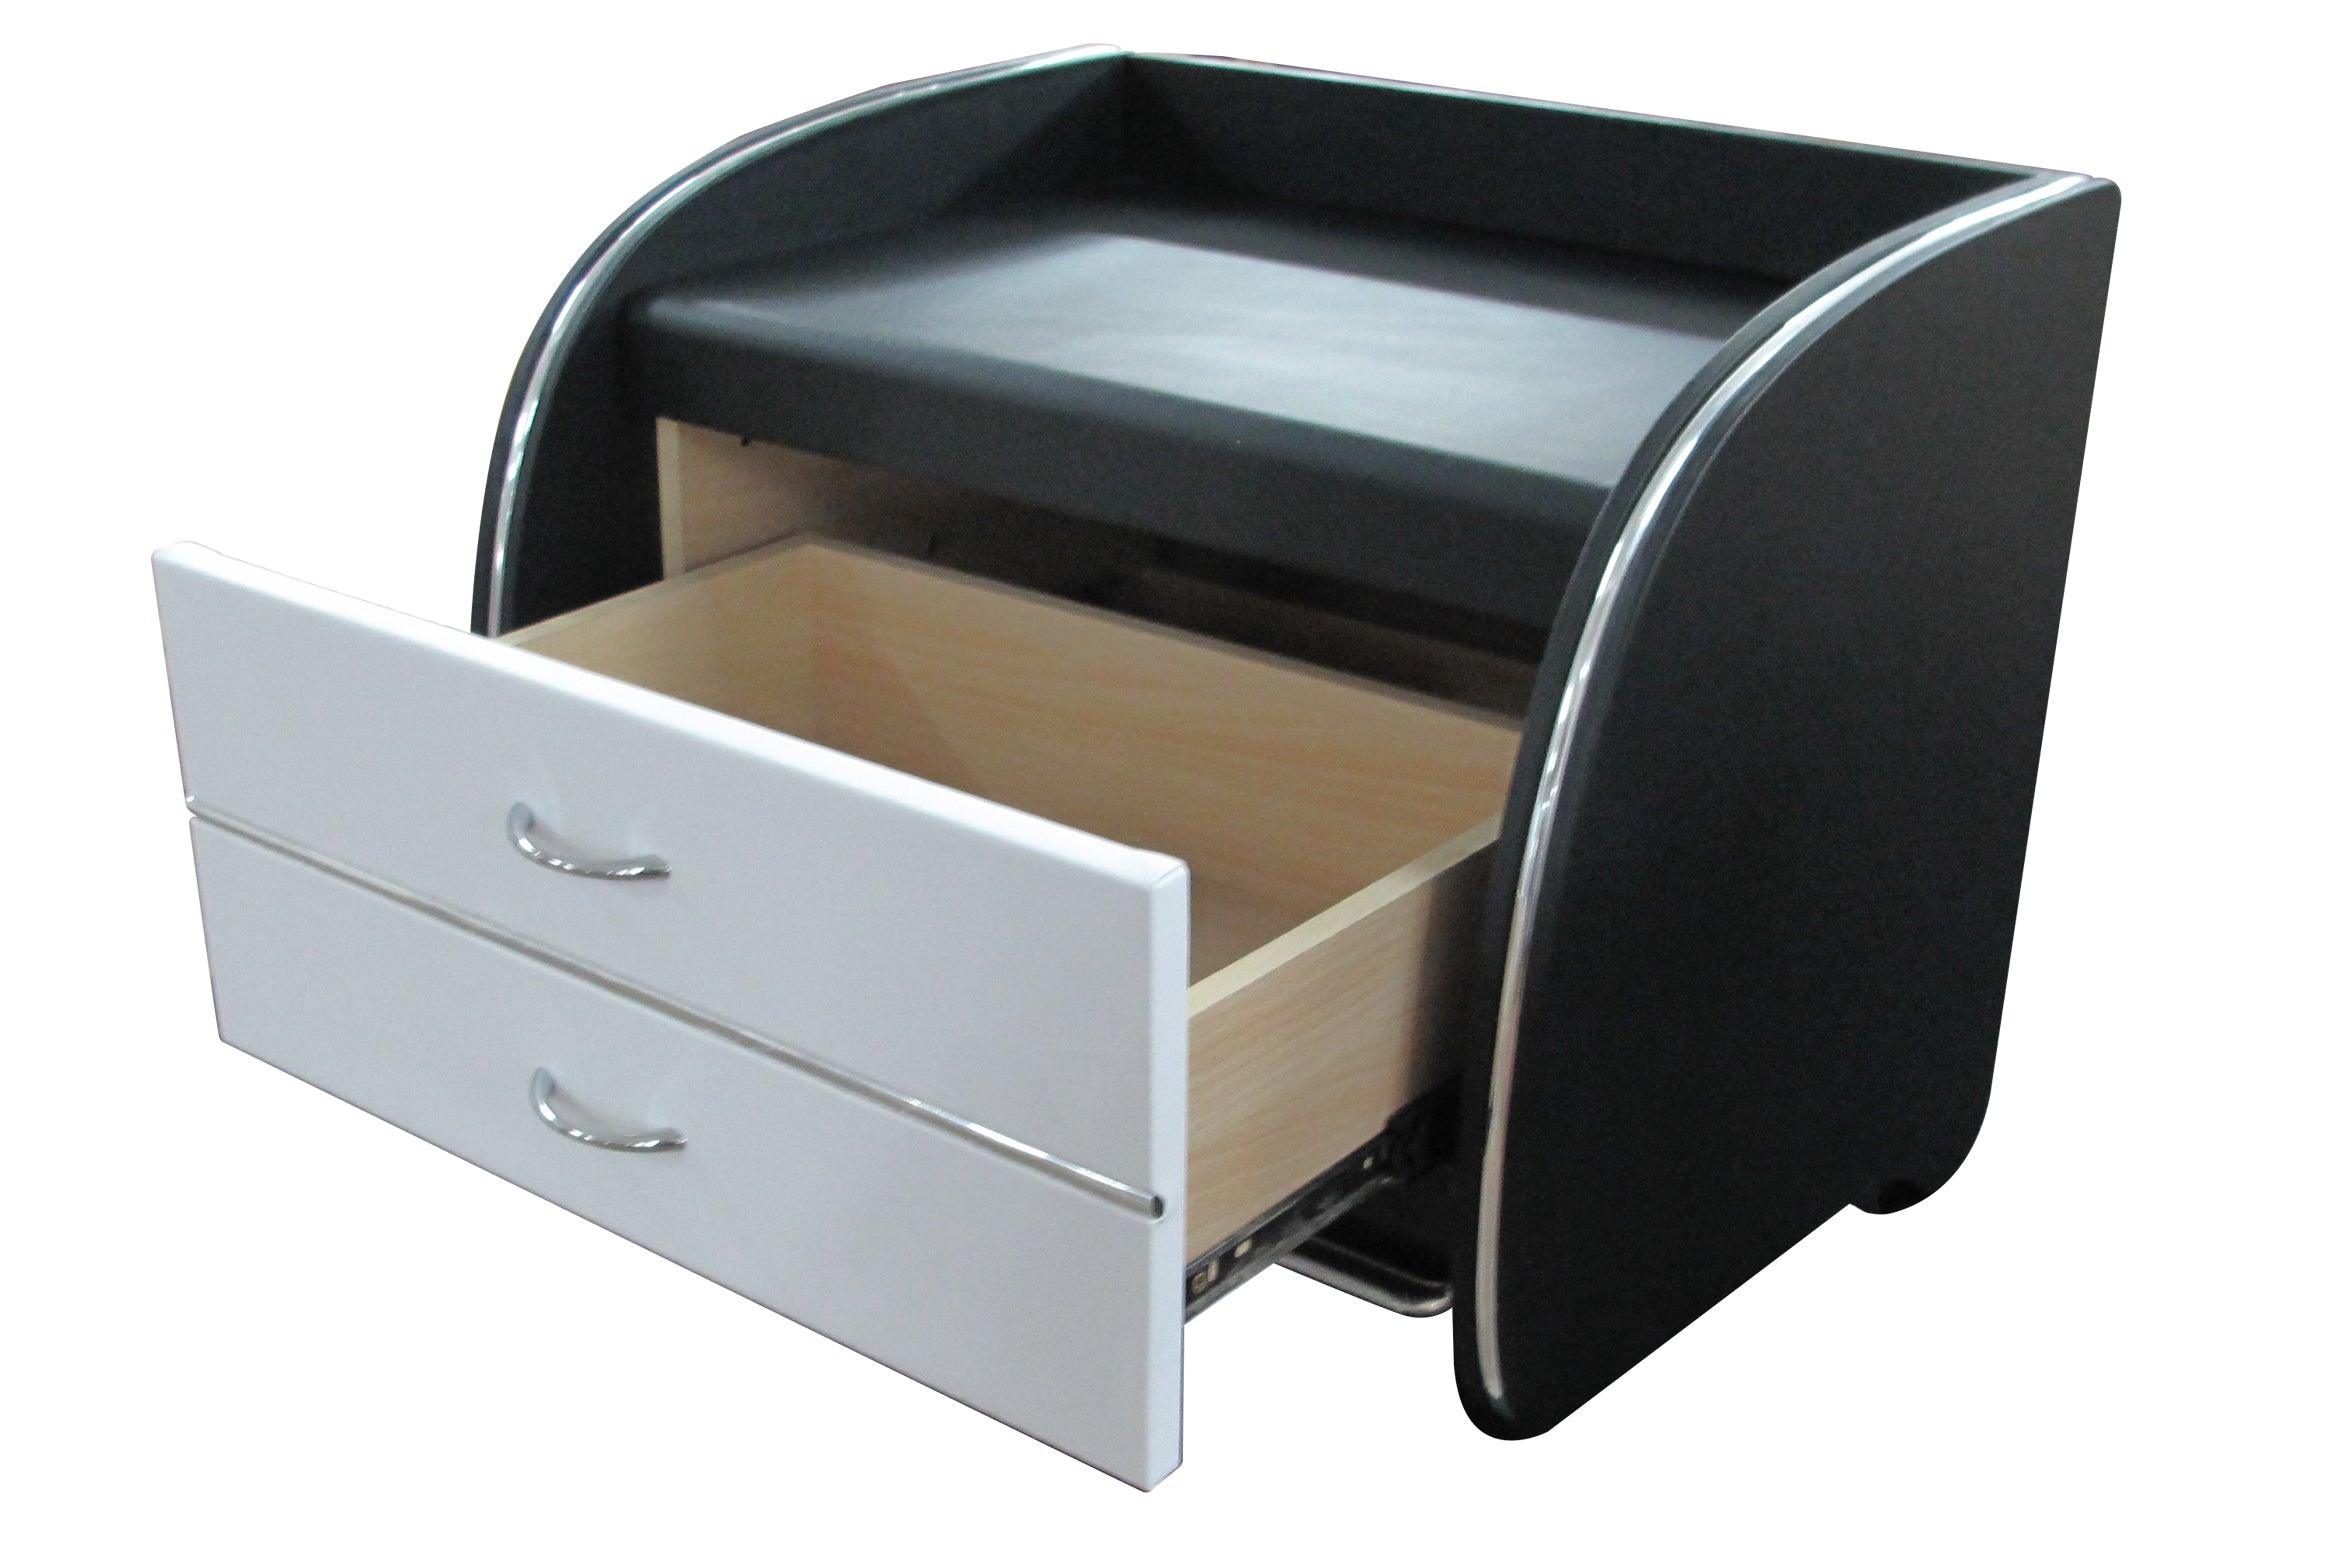 Modern Pandora Bedside Table in Black and White - Smart Storage and Sleek Design